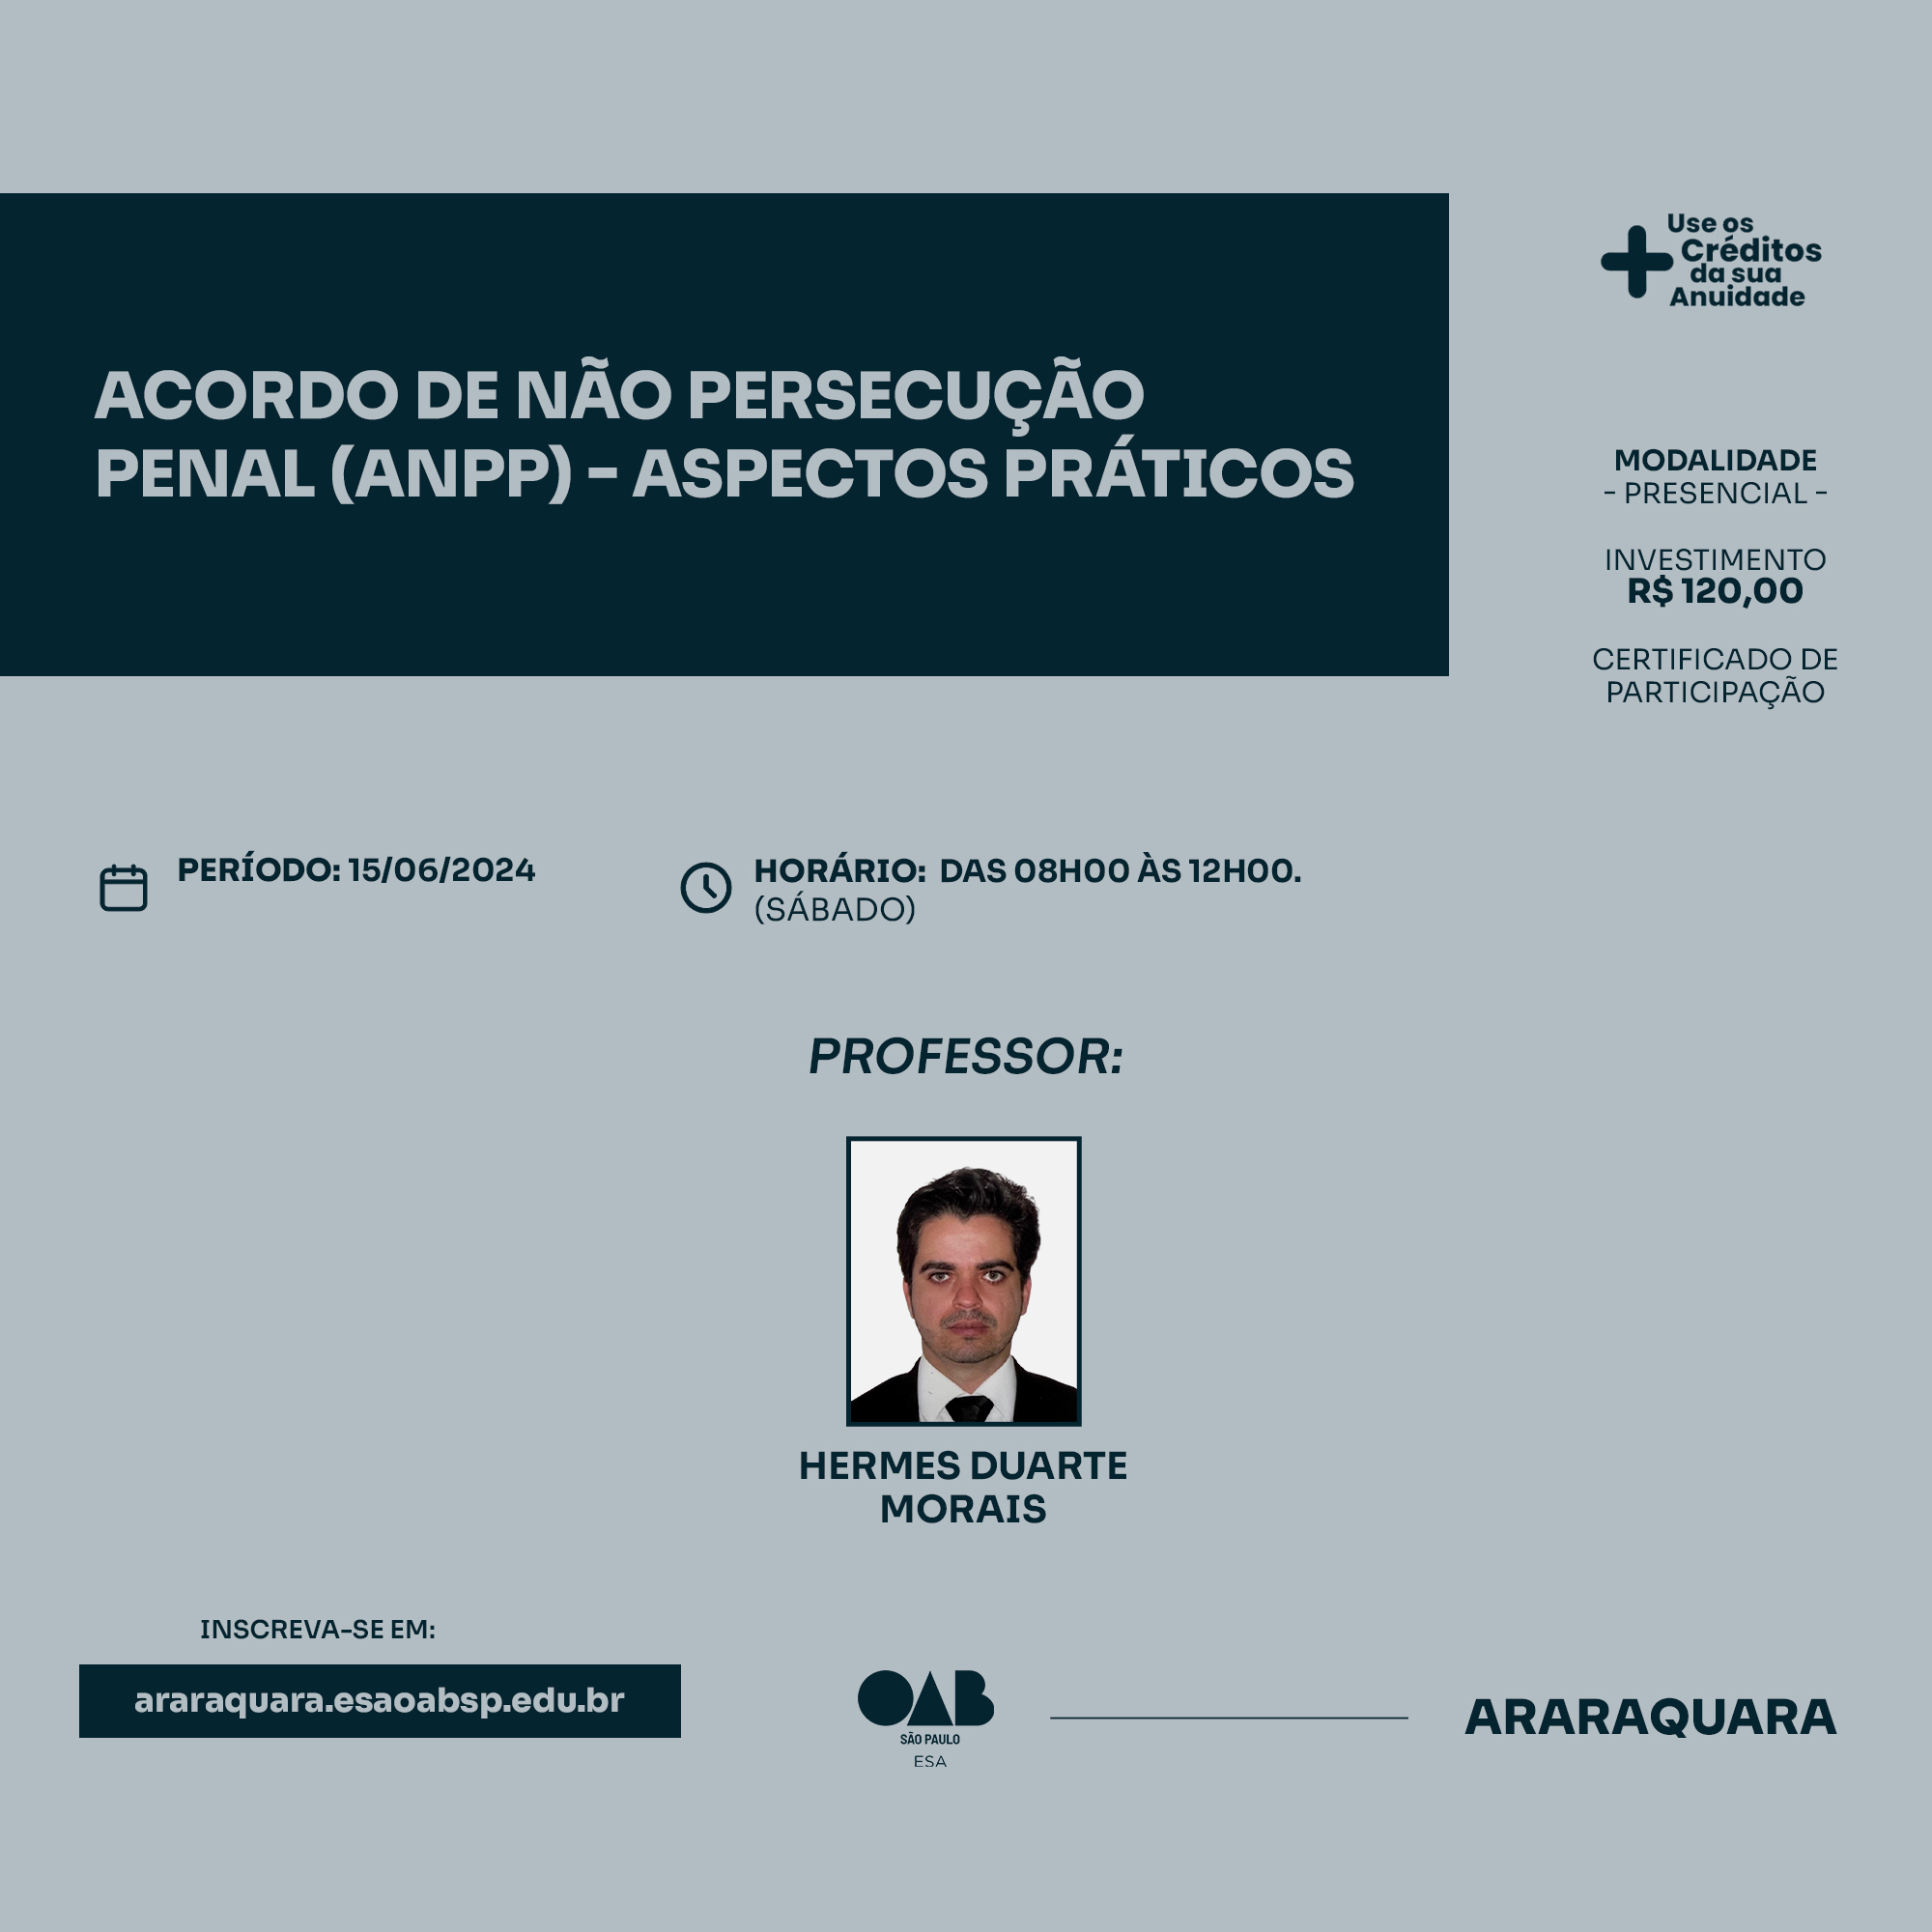 https://araraquara.esaoabsp.edu.br/Curso/10054-acordo-de-nao-persecucao-penal-(anpp)-aspectos-praticos/10054